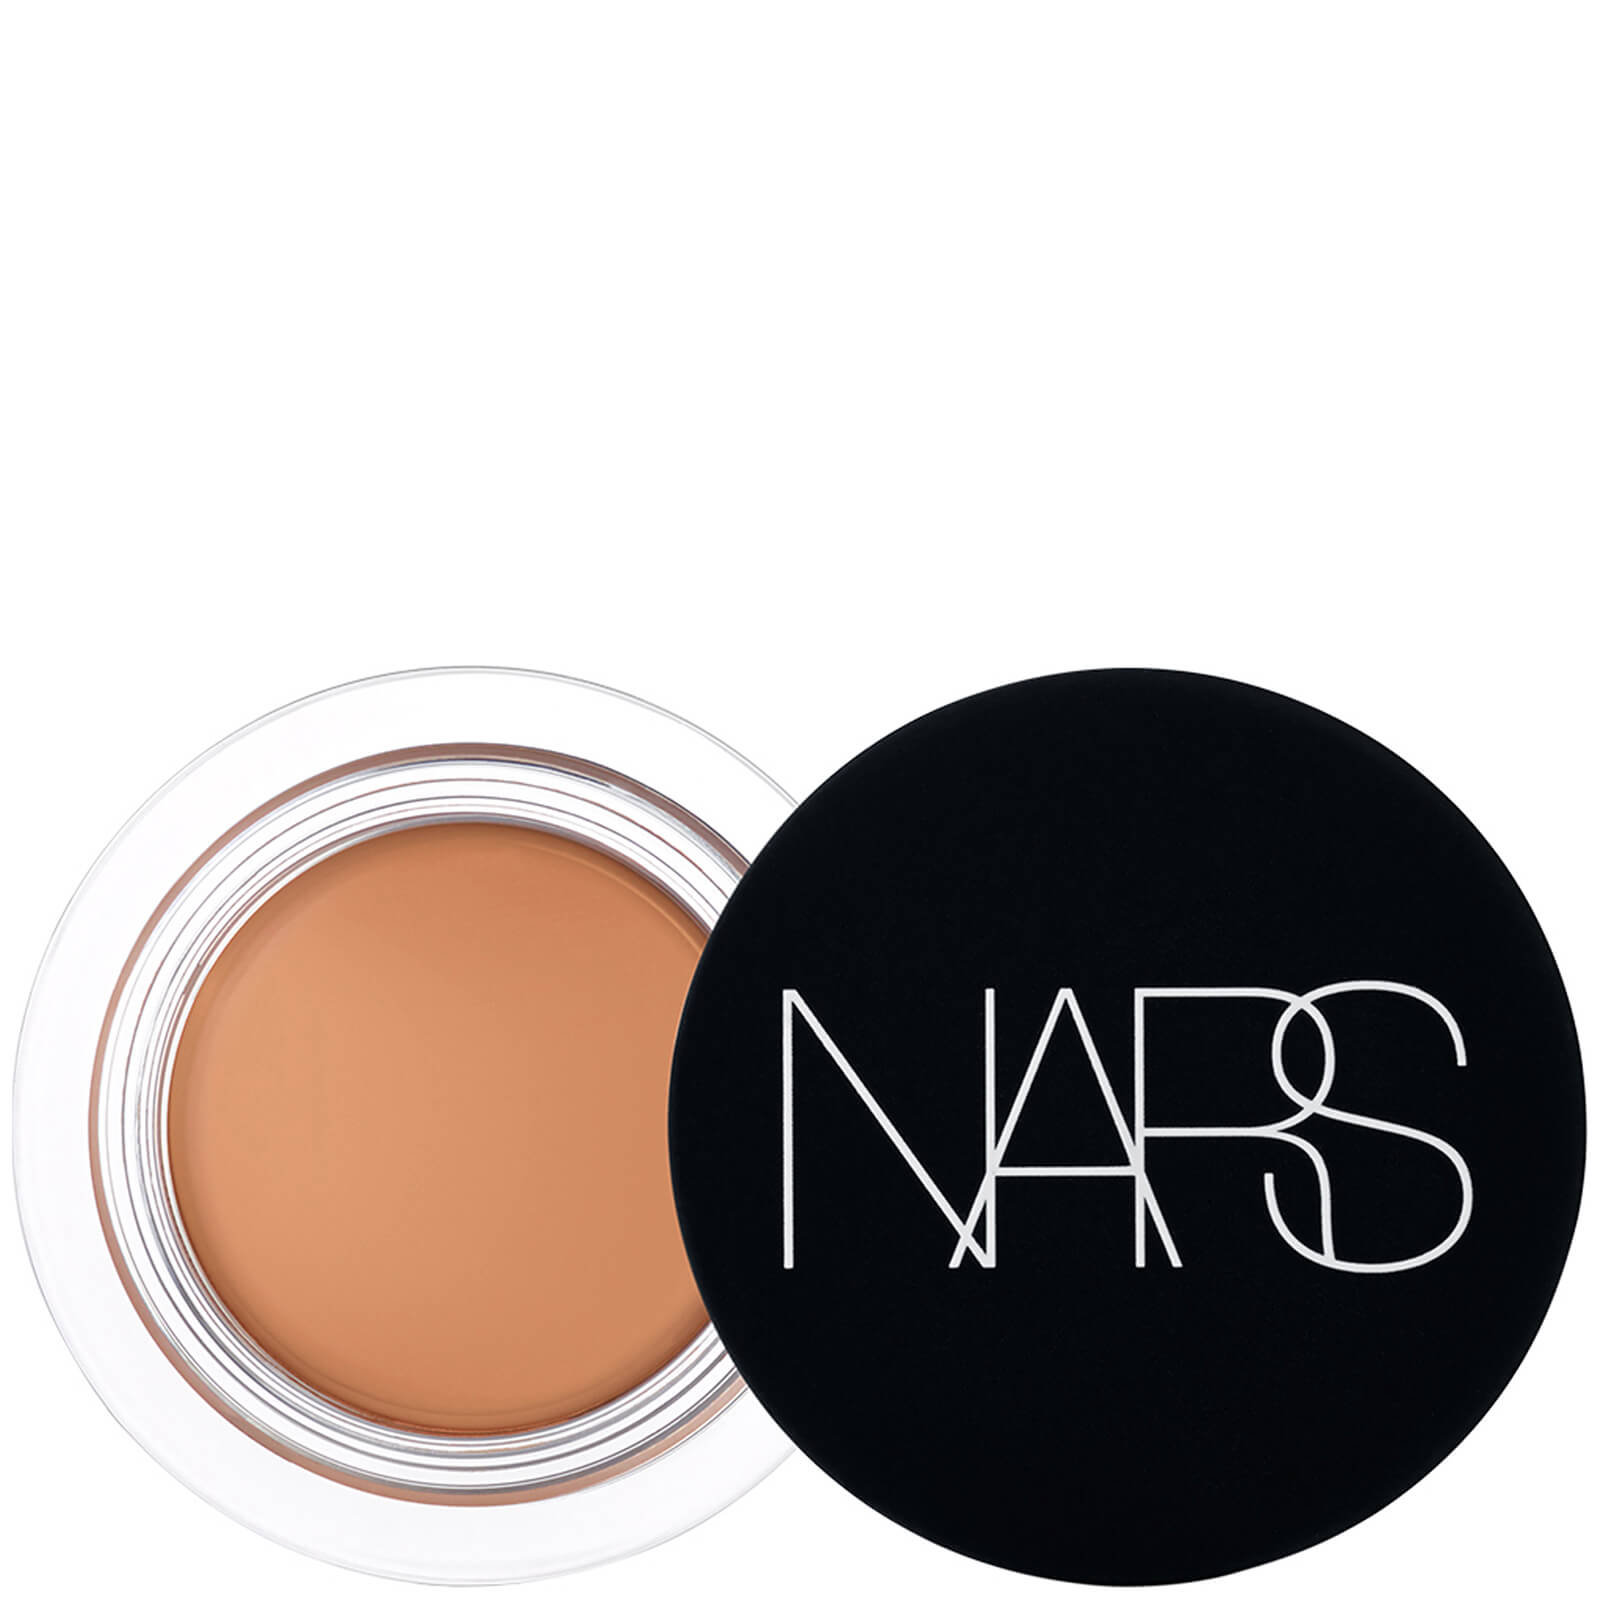 NARS Cosmetics Soft Matte Complete Concealer 5g (Various Shades) - Chestnut